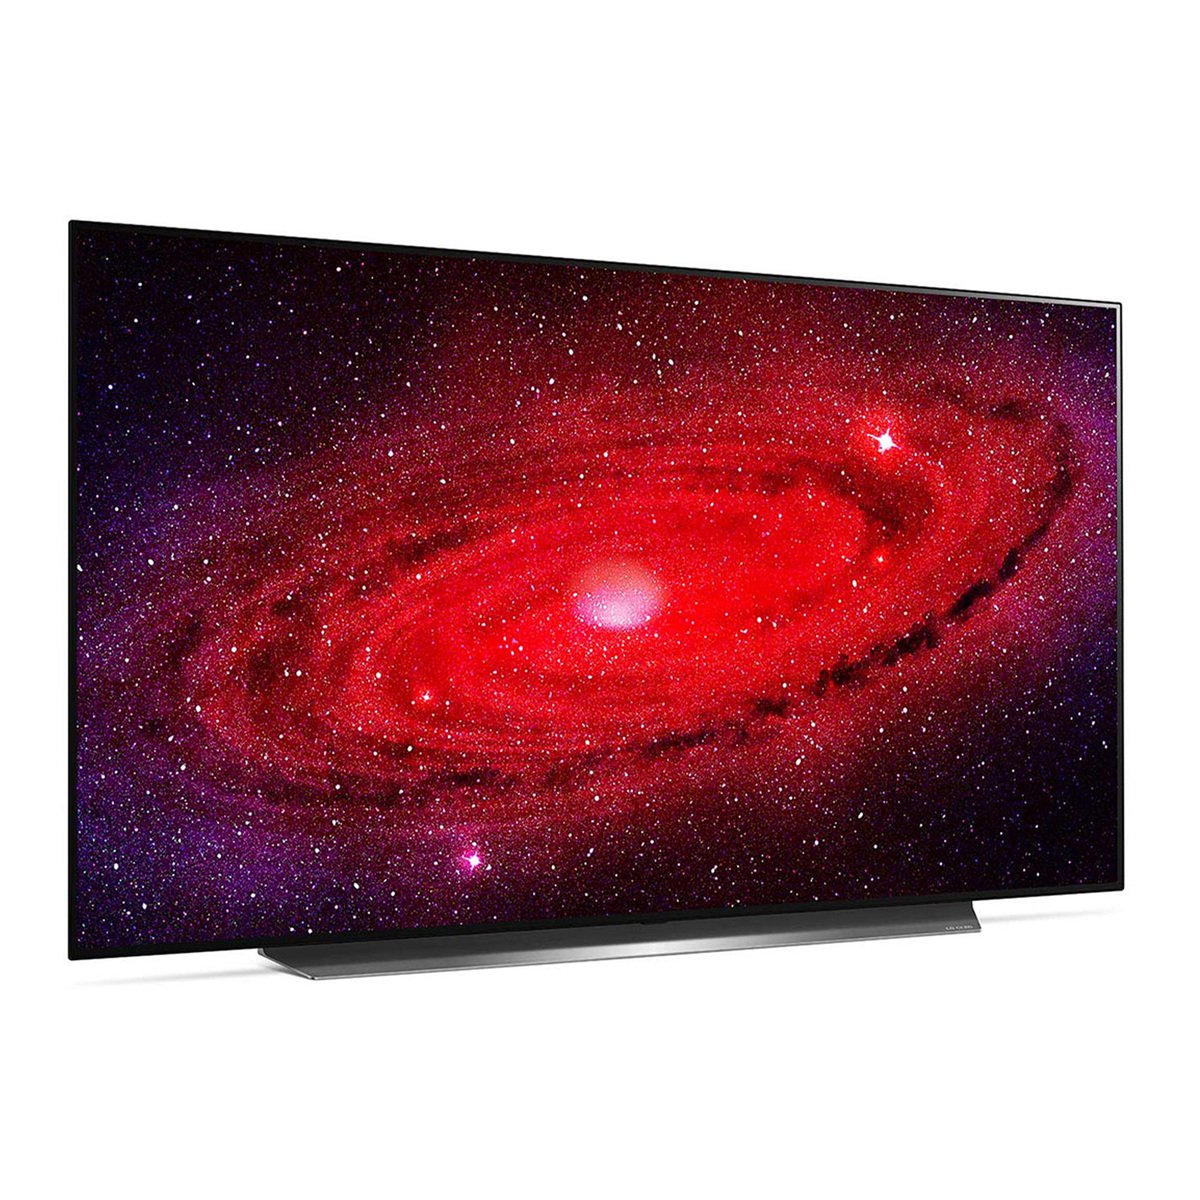 LG OLED TV 55 Inch CX Series, Cinema Screen Design 4K Cinema HDR WebOS Smart ThinQ AI Pixel Dimming